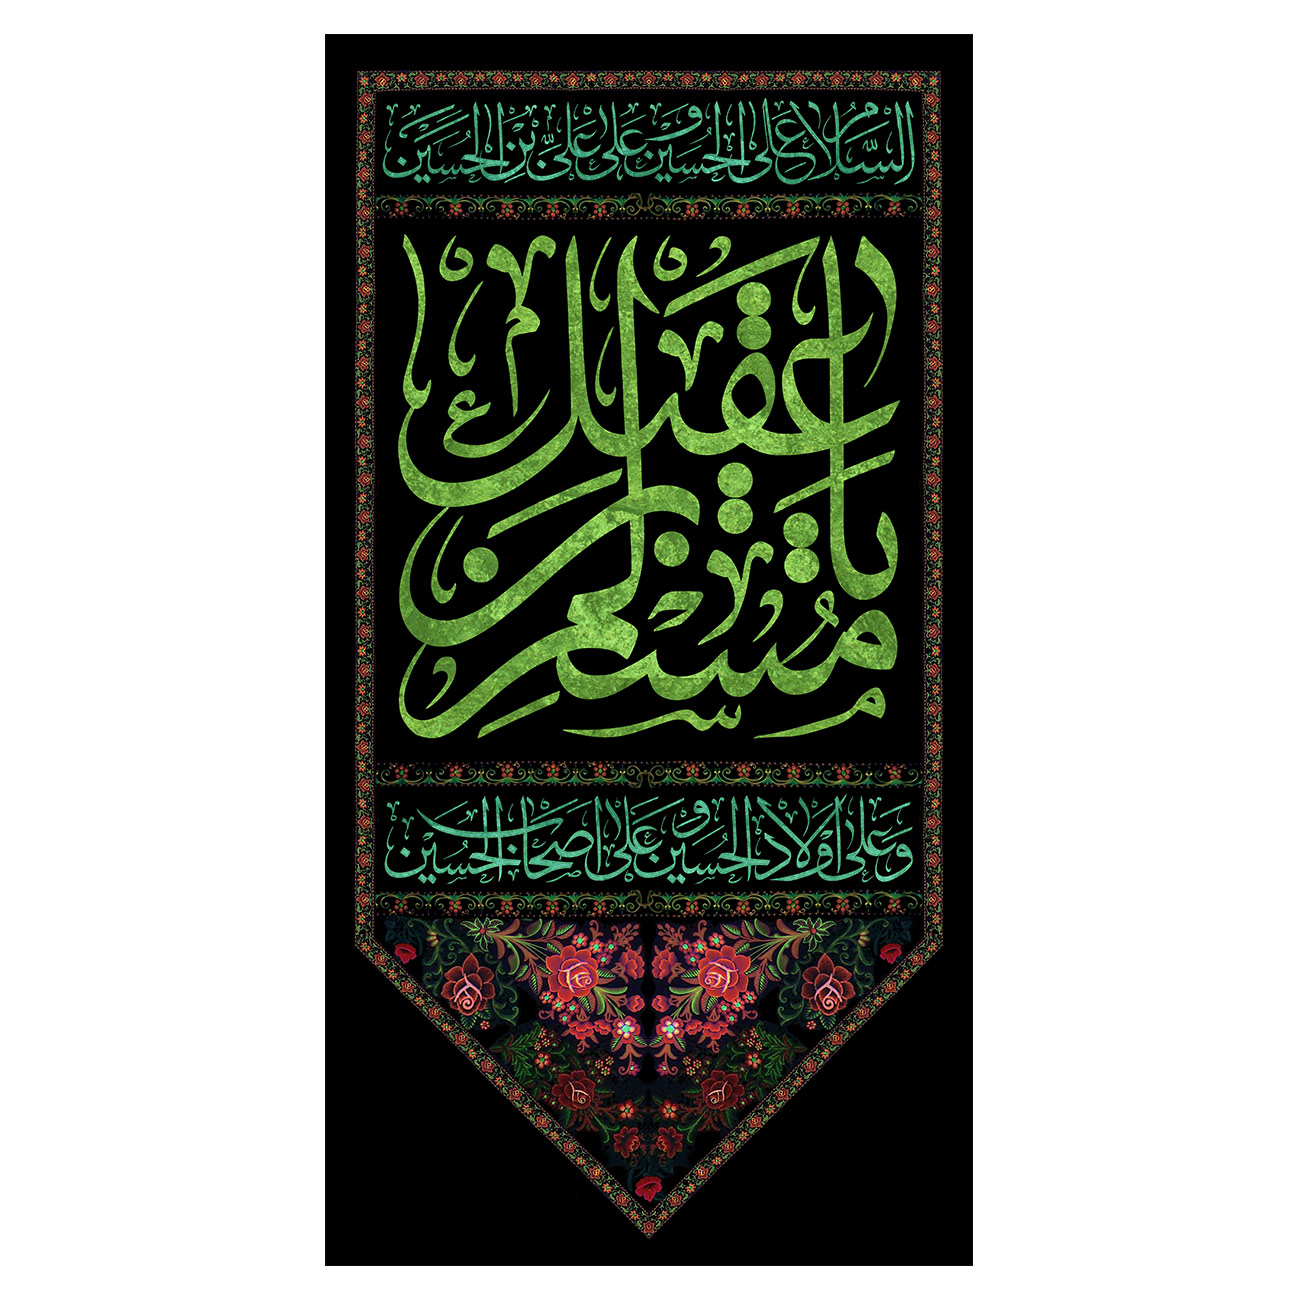  پرچم طرح مذهبی مدل یا مسلم بن عقیل کد 2381D 4171578